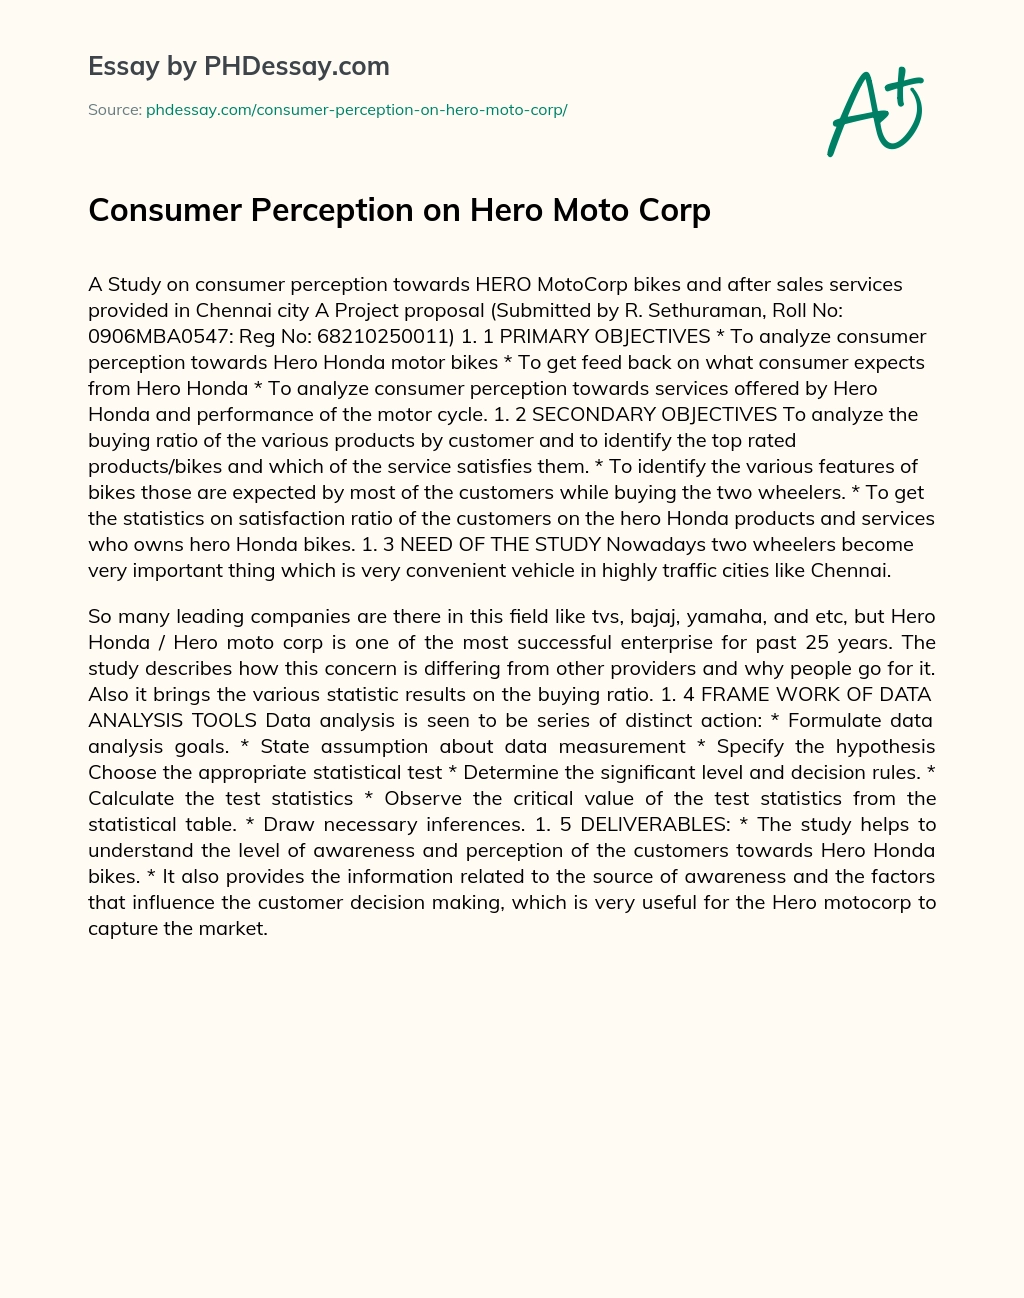 Consumer Perception on Hero Moto Corp essay